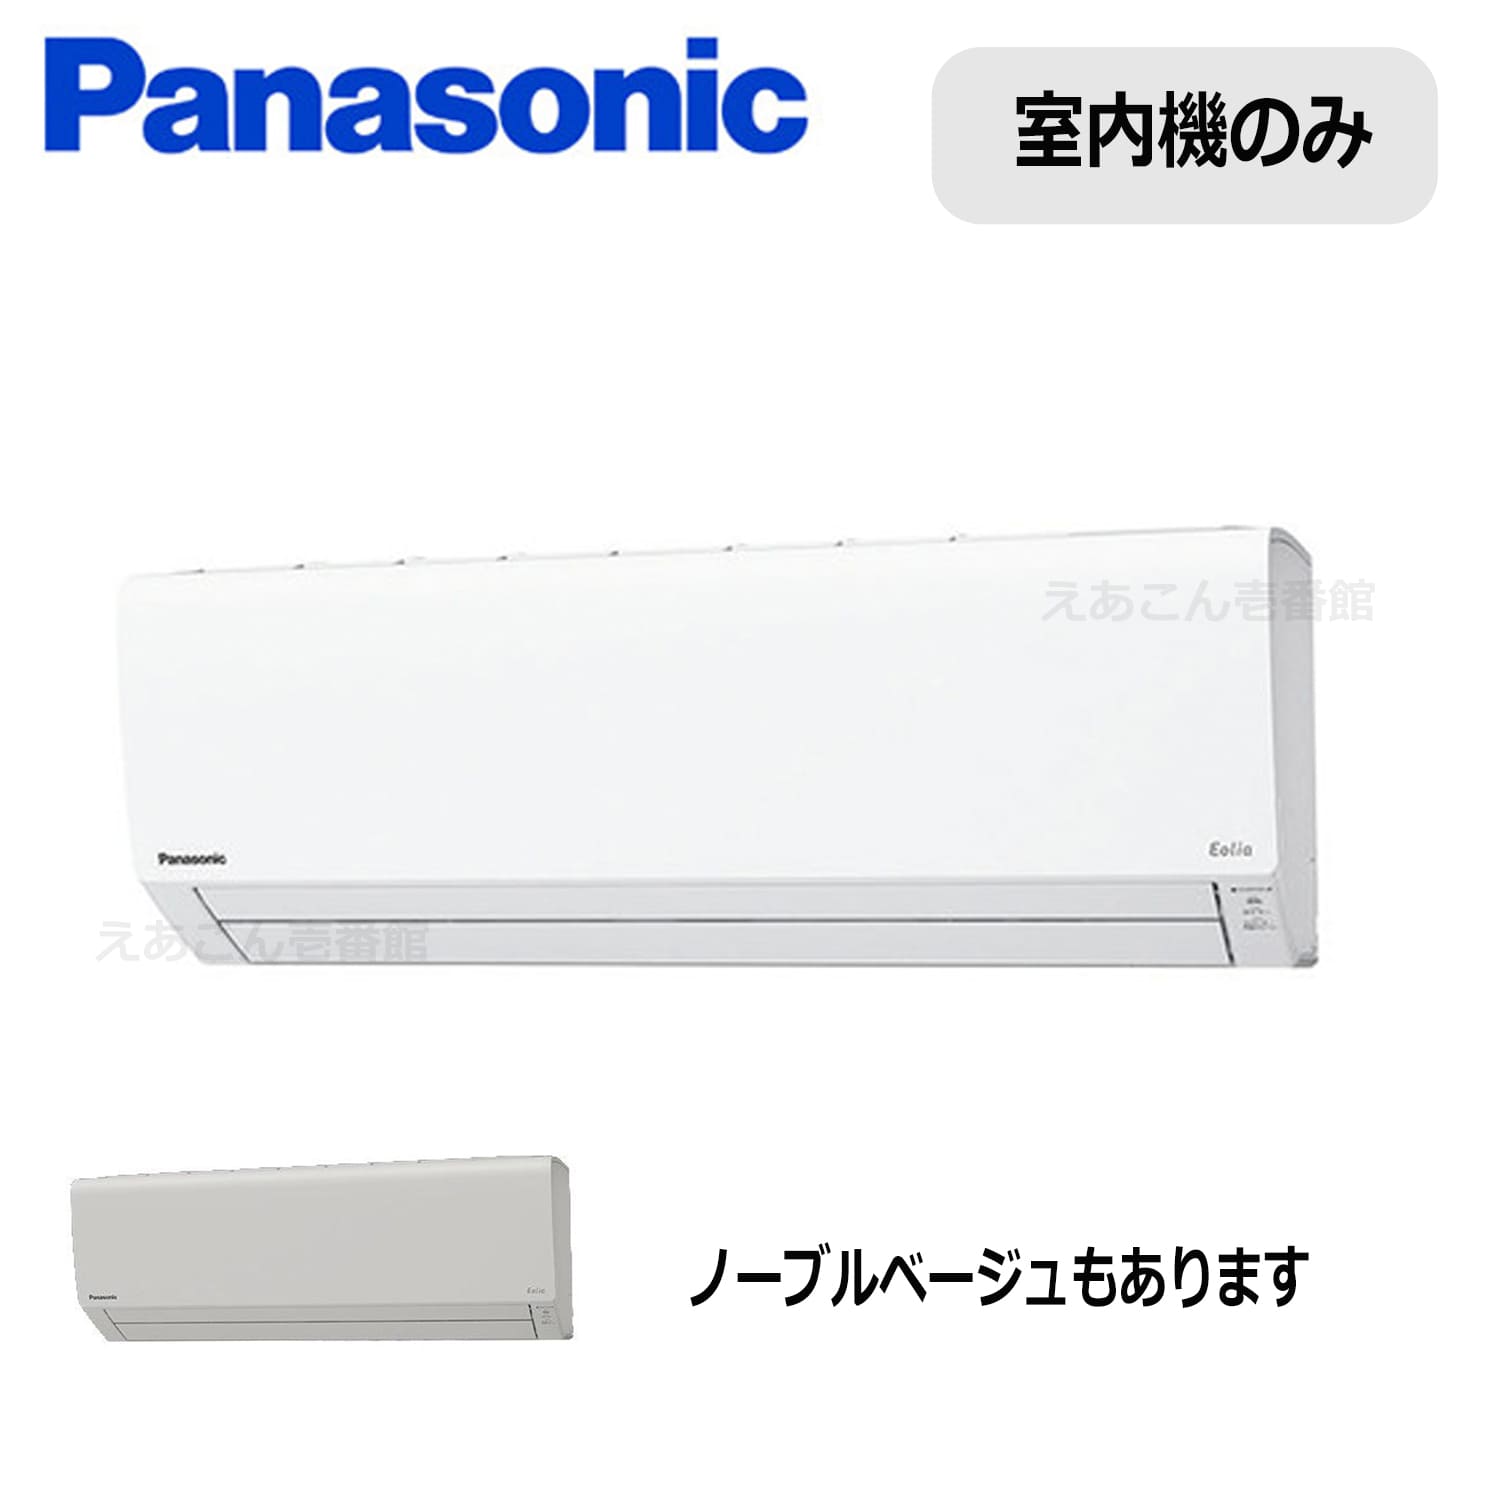 Panasonic  CS-MJ280D2  壁掛形　2.8kw　システムマルチ室内機（単相　200V　ワイヤレス）主に10畳用　※室内機のみの為別途室外機が必要となります。